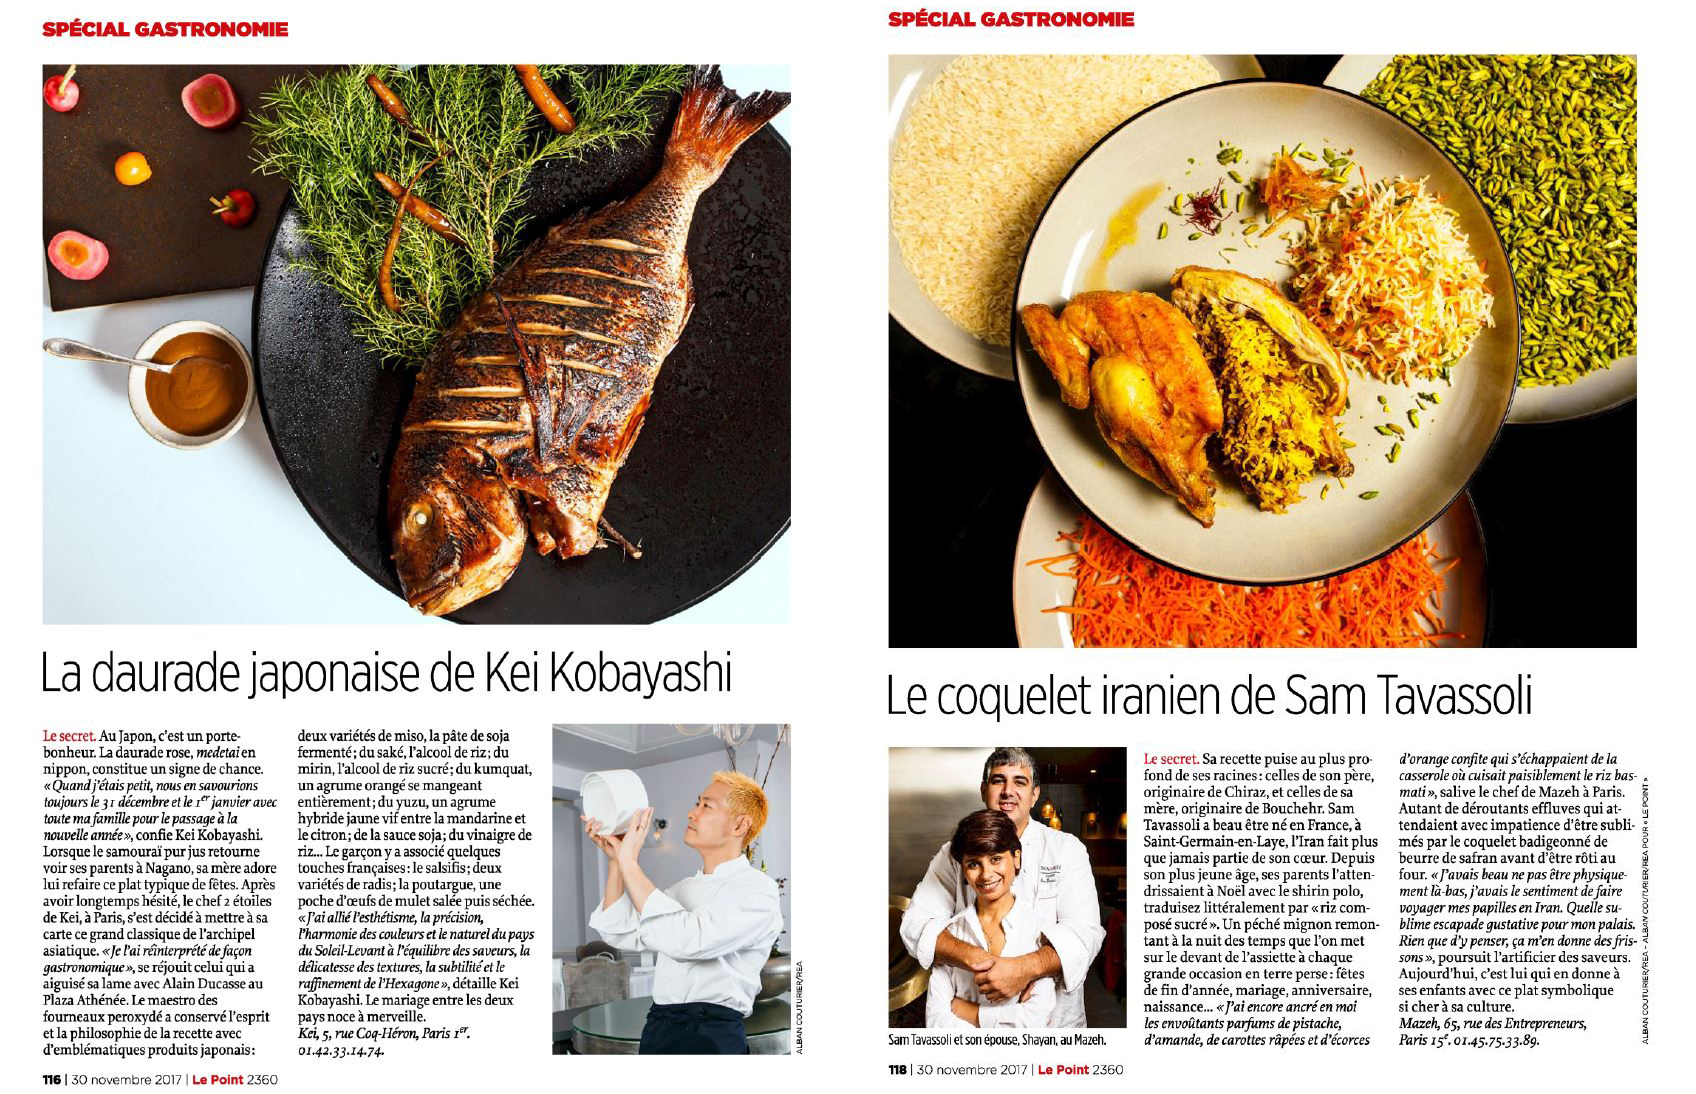 Special Gastronomie, Magazine Le Point, Kei Kobayashi, Sam Tavassoli, ©Alban Couturier